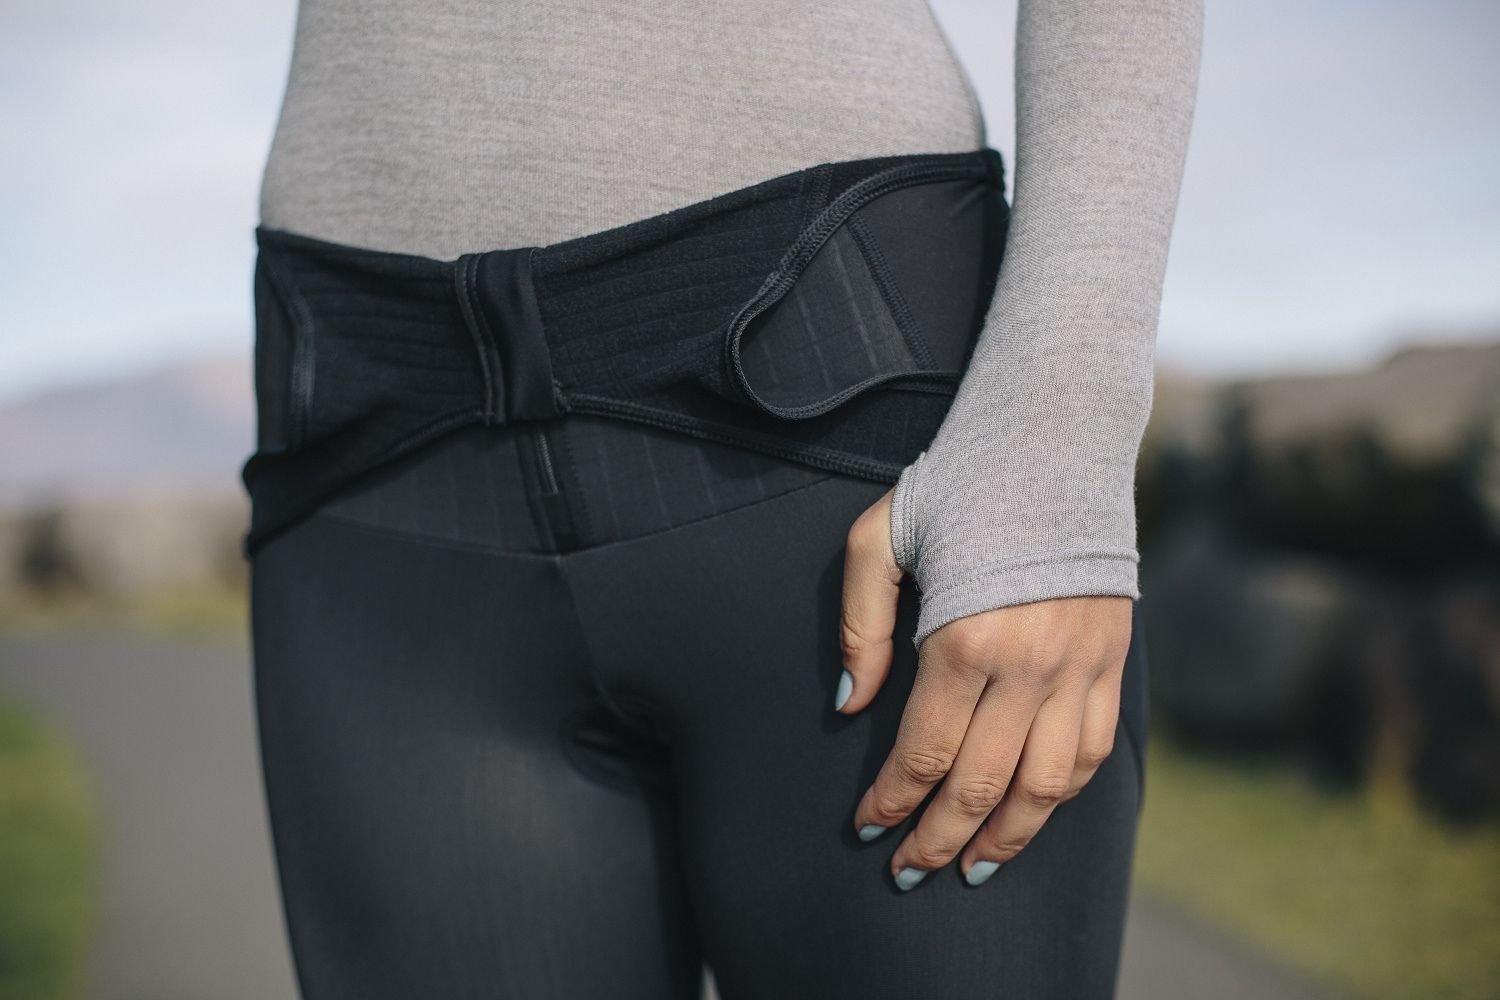 Women's Merino Long Sleeve Baselayer Grey 1.0